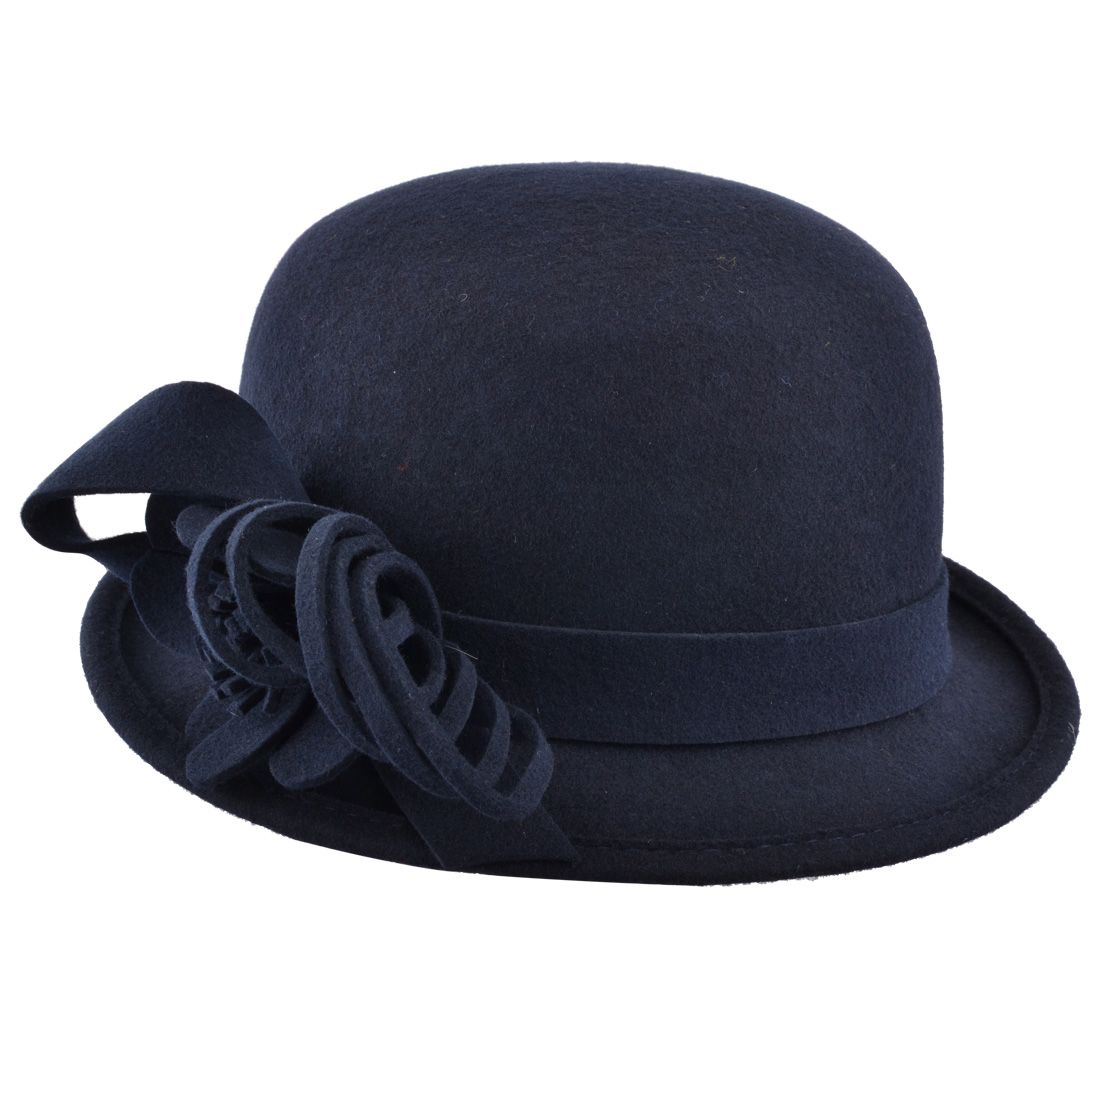 Wool Felt Cloche Hat With Flower